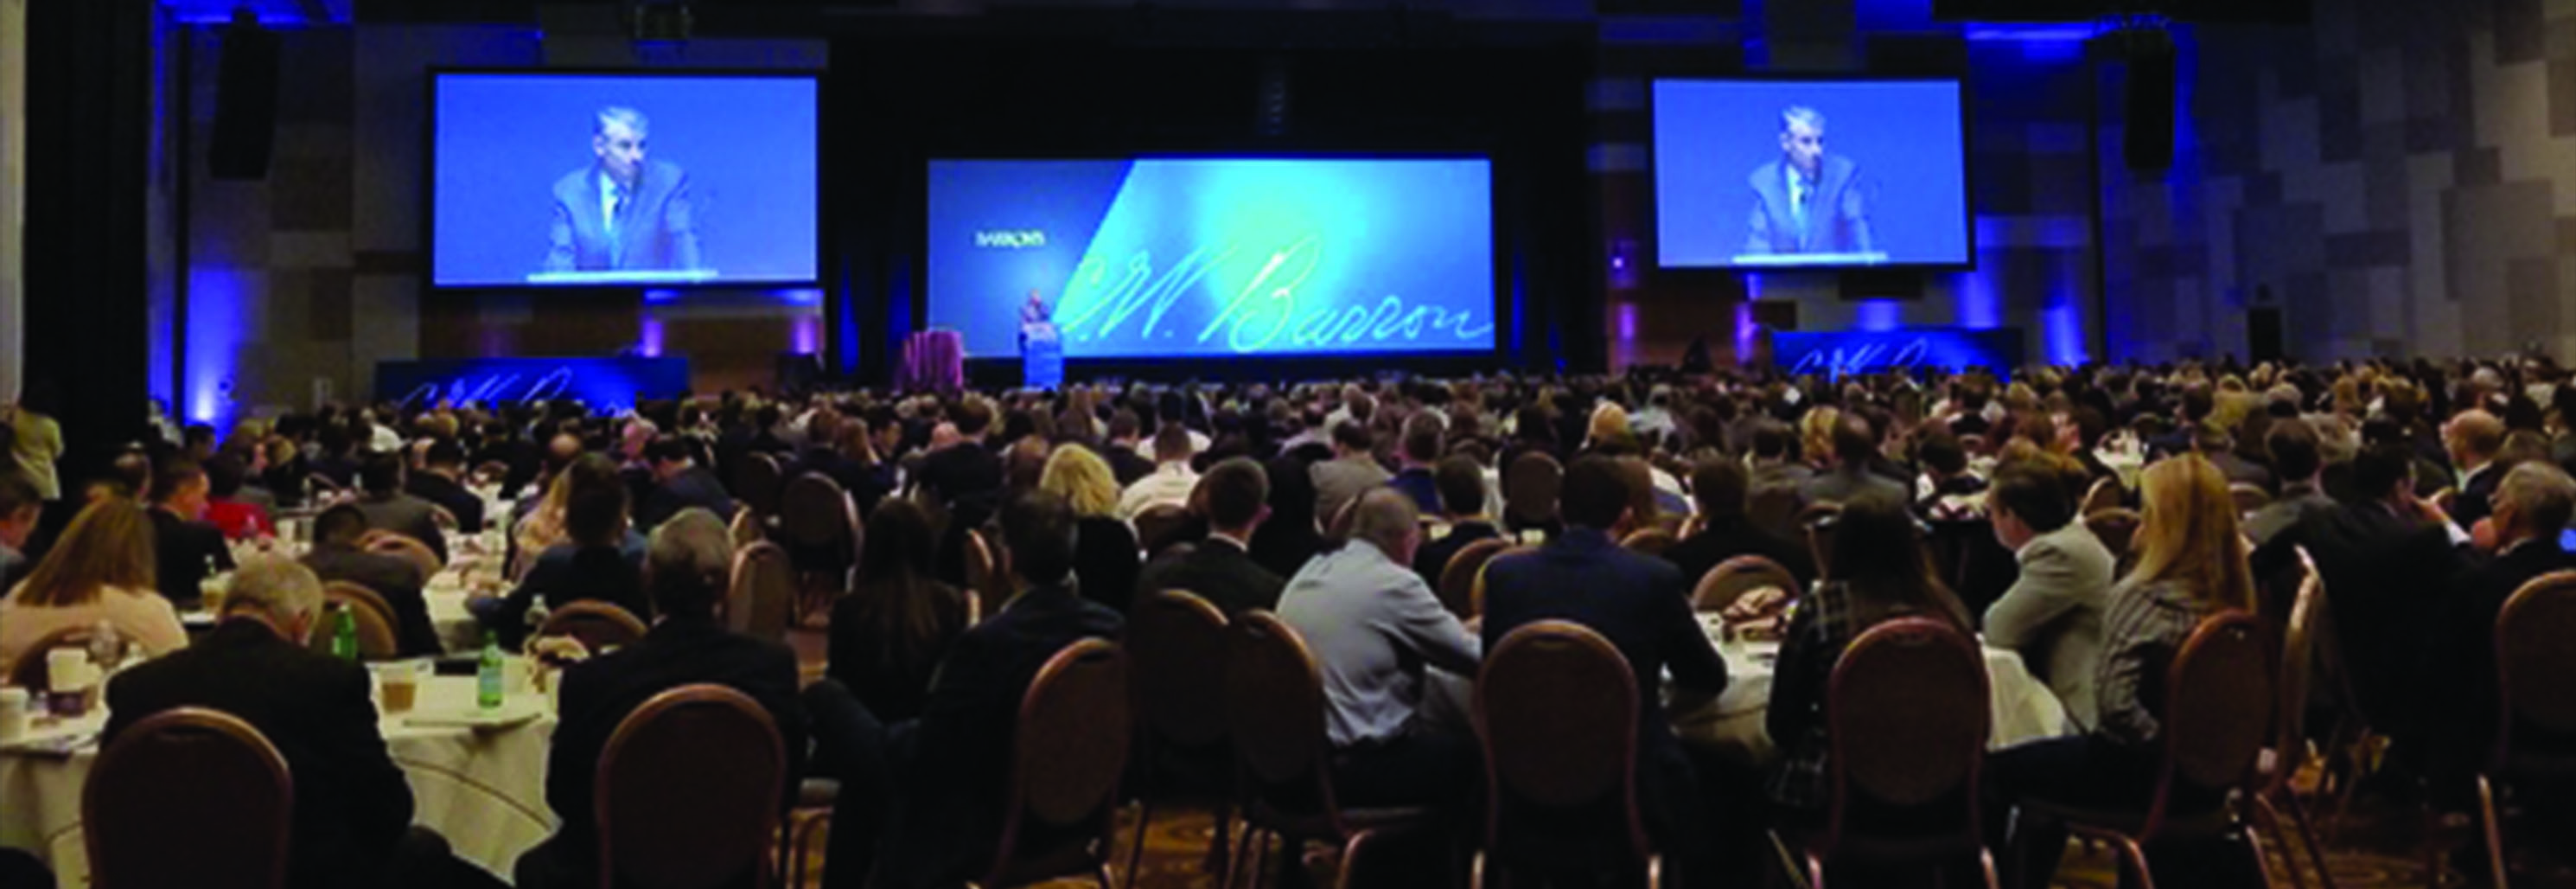 GMAG attends Barron’s Top Advisory Team Summit in Las Vegas